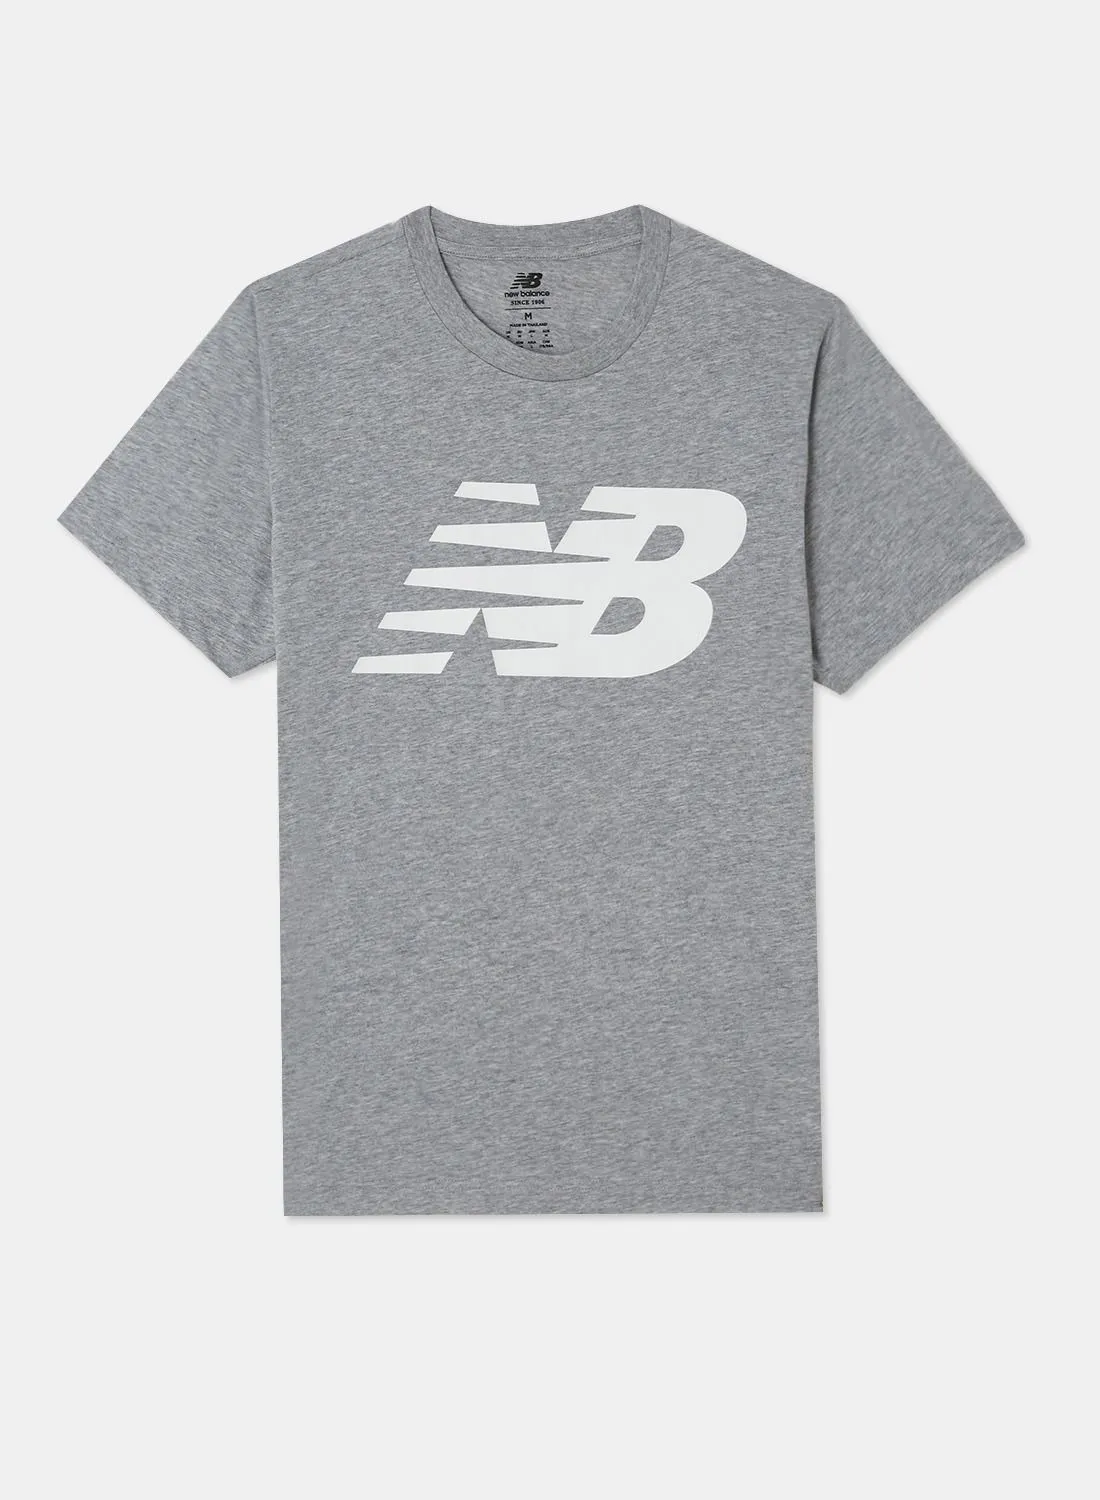 New Balance Classic Logo T-Shirt